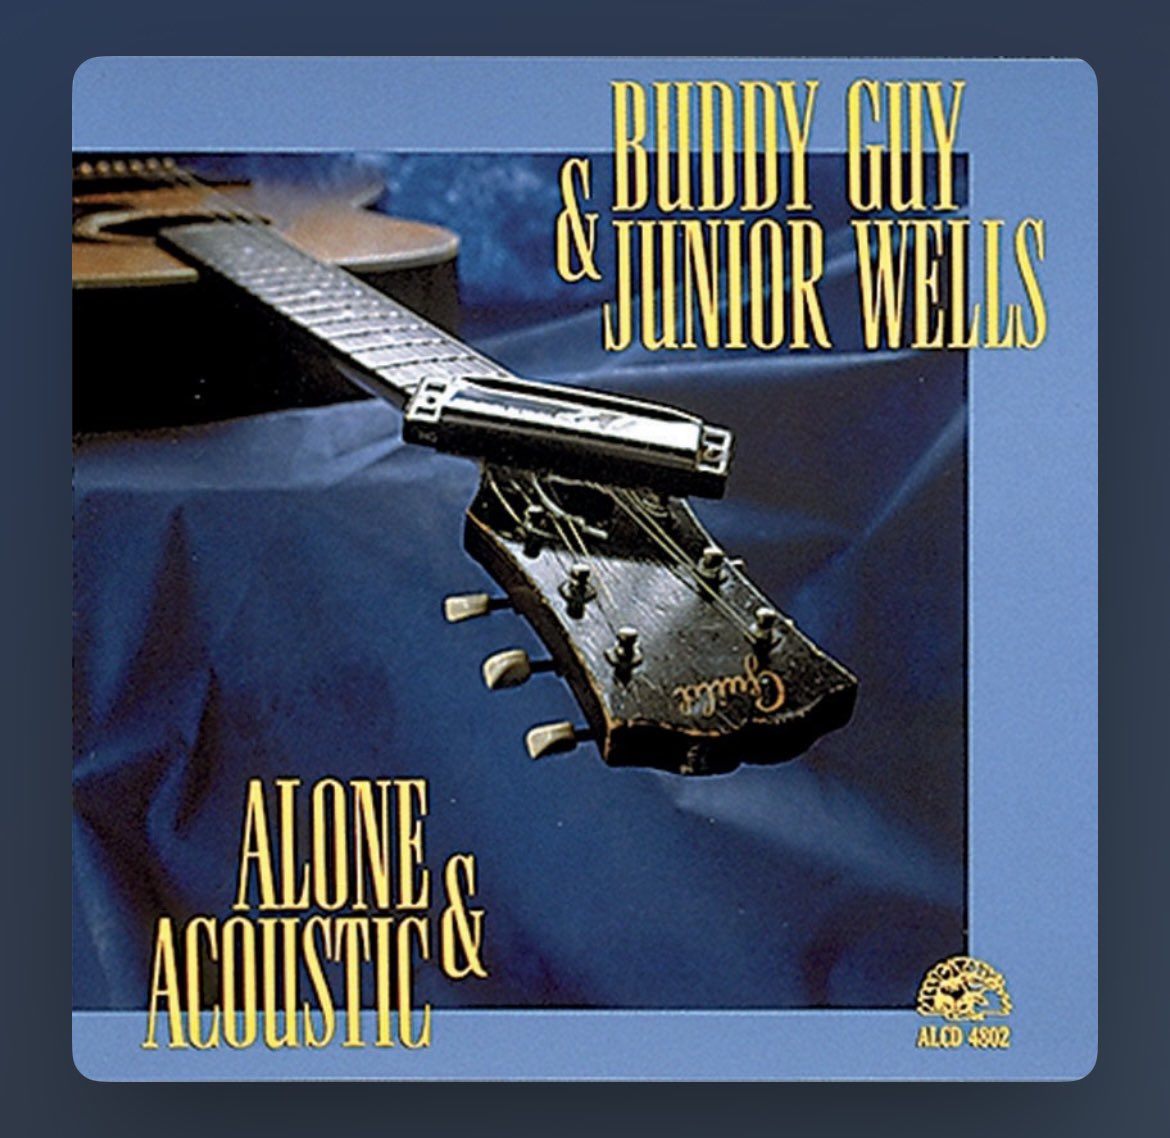 🎶#JBsNowPlaying🎶

Wrong Doing Woman
- Buddy Guy & Junior Wells

#bluesmusic #buddyguy #juniorwells #nowplaying